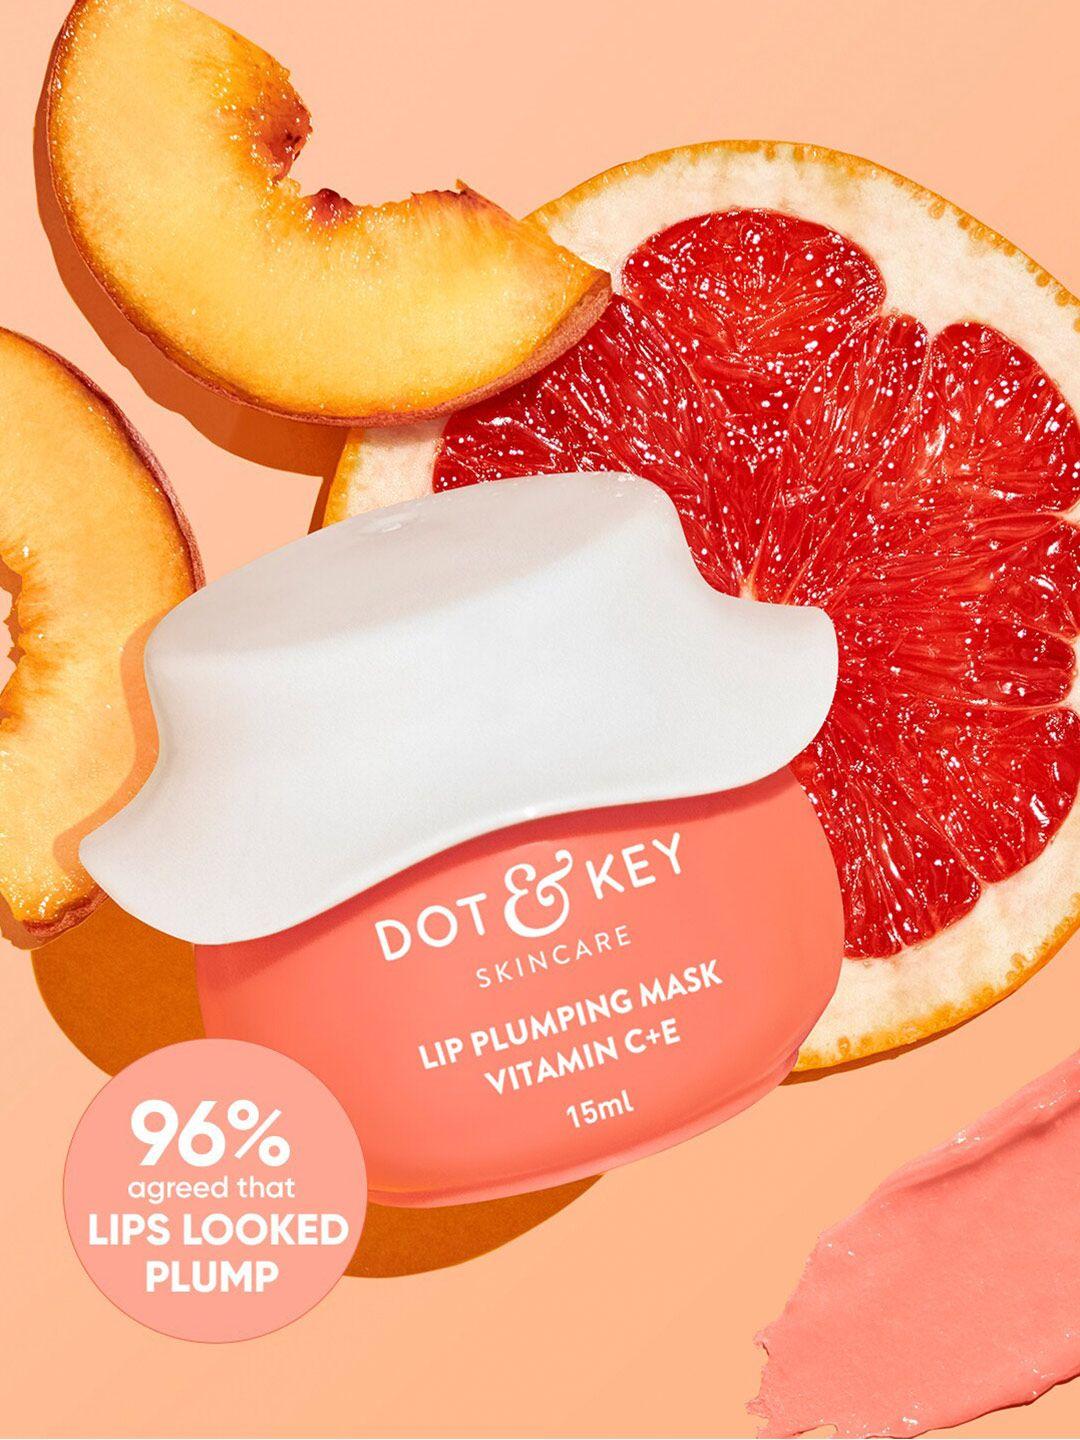 dot & key vitamin c+e peachy nude lip plumping mask-blood orange for lip pigmentation-15ml